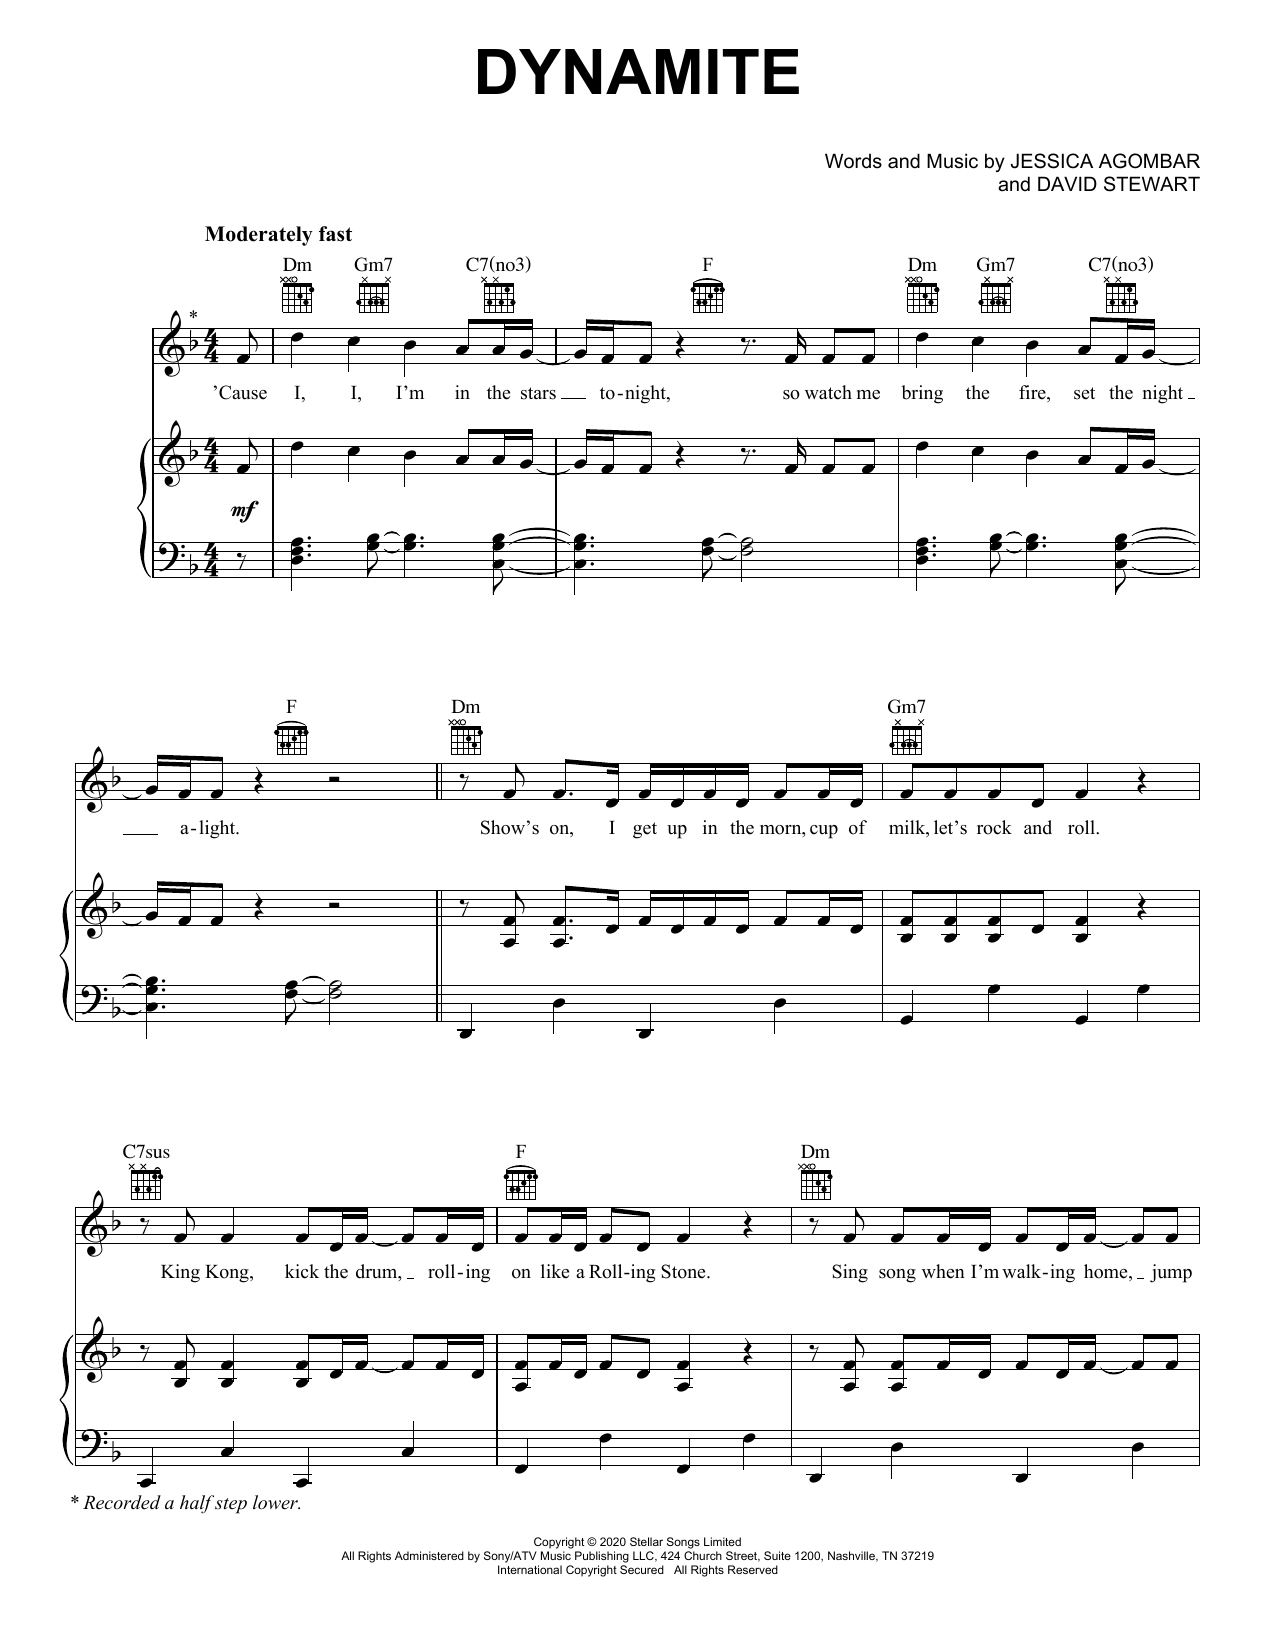 BTS Dynamite Sheet Music Notes & Chords for Violin Duet - Download or Print PDF